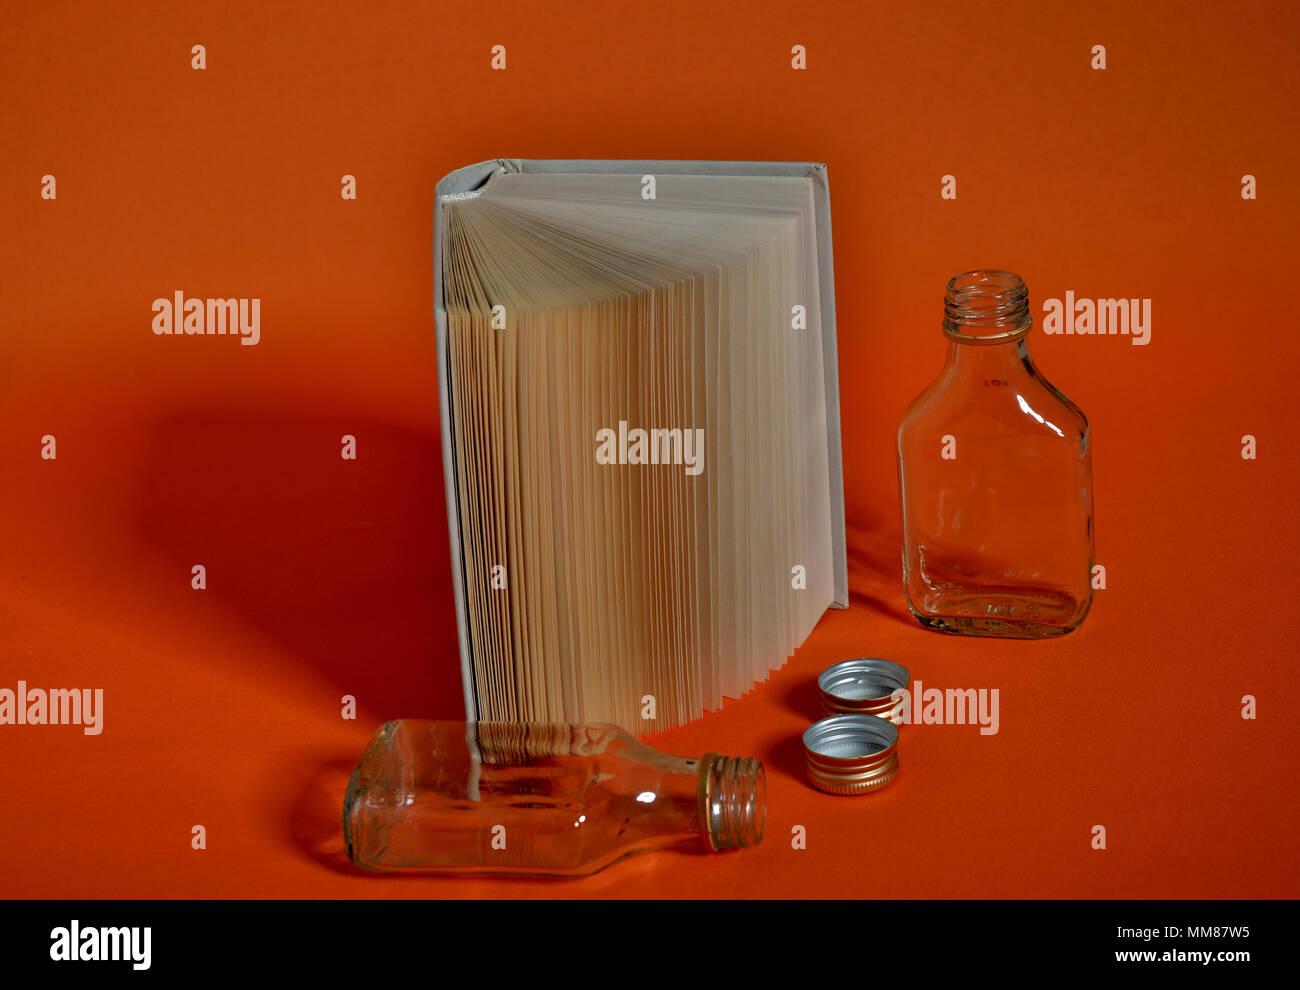 Open standing book and liquor bottles on orange background Stock Photo